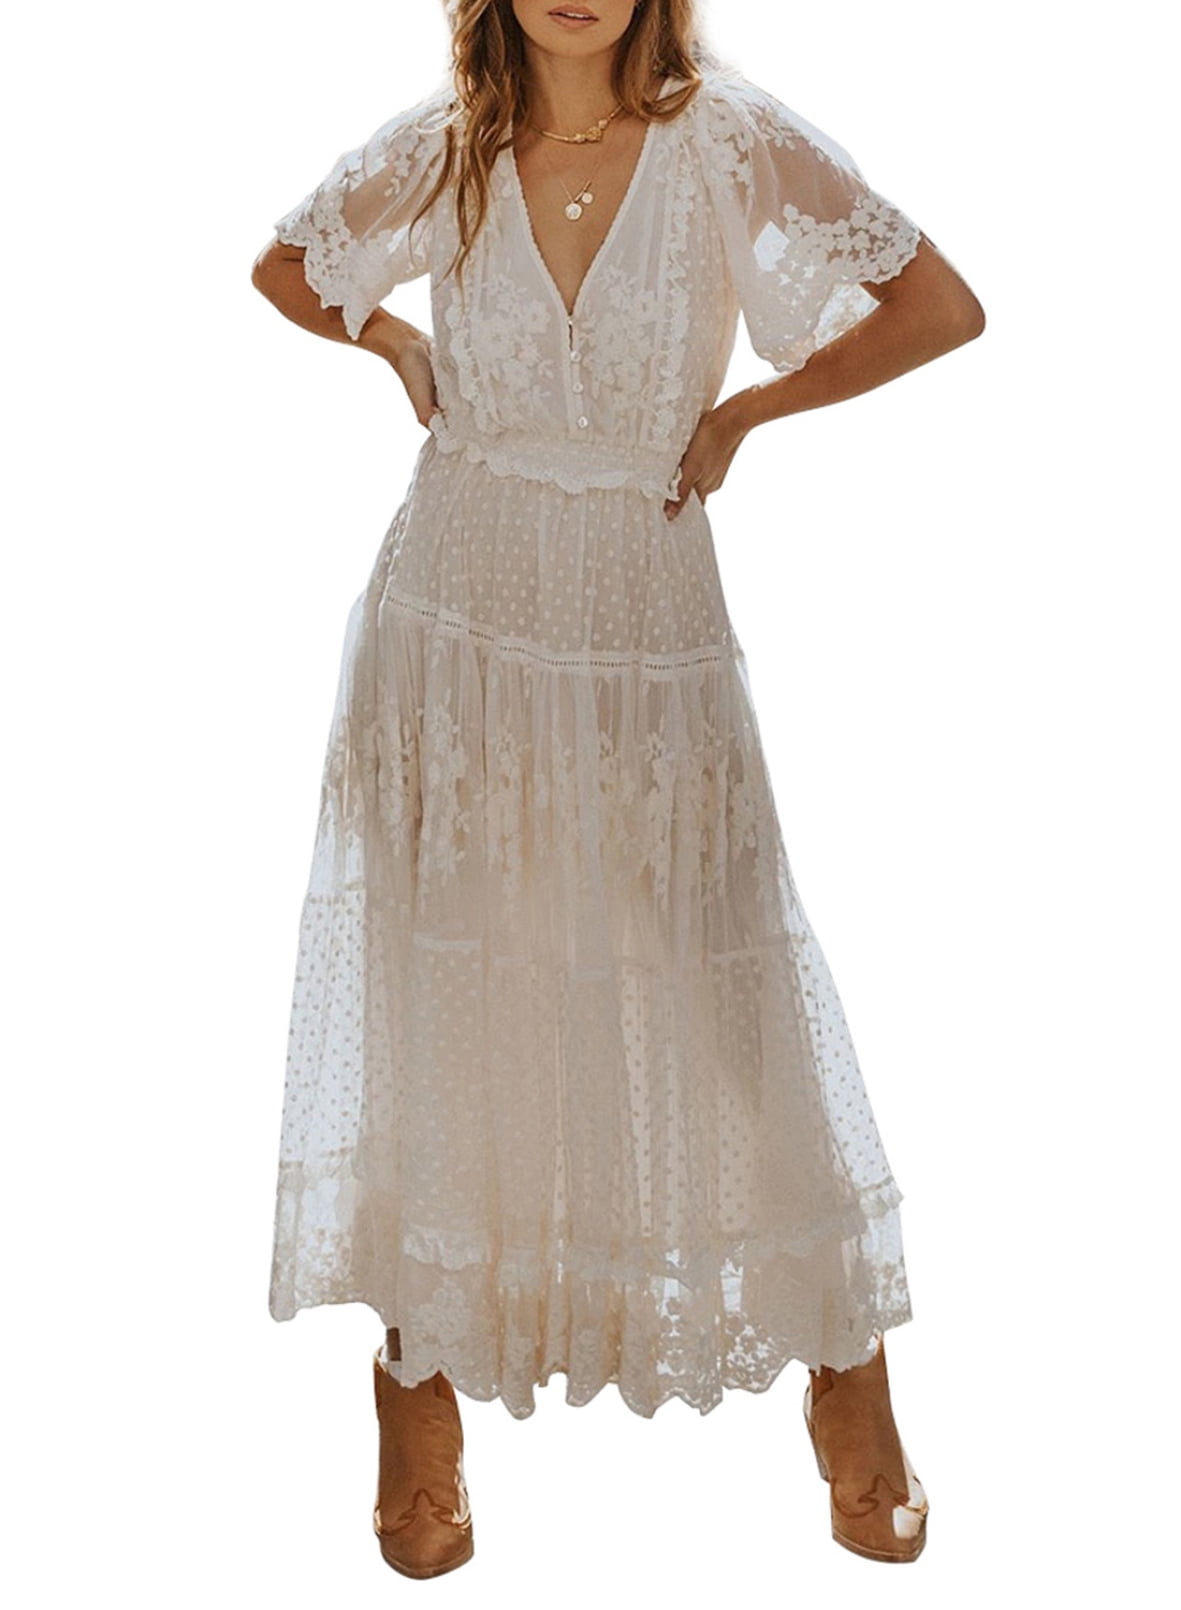 Gergeos Fashion Dress Women Oversize 3/4 Sleeve O-Neck Solid Overlay Lace Chiffon Dress Knee-Length Dress S-5XL 